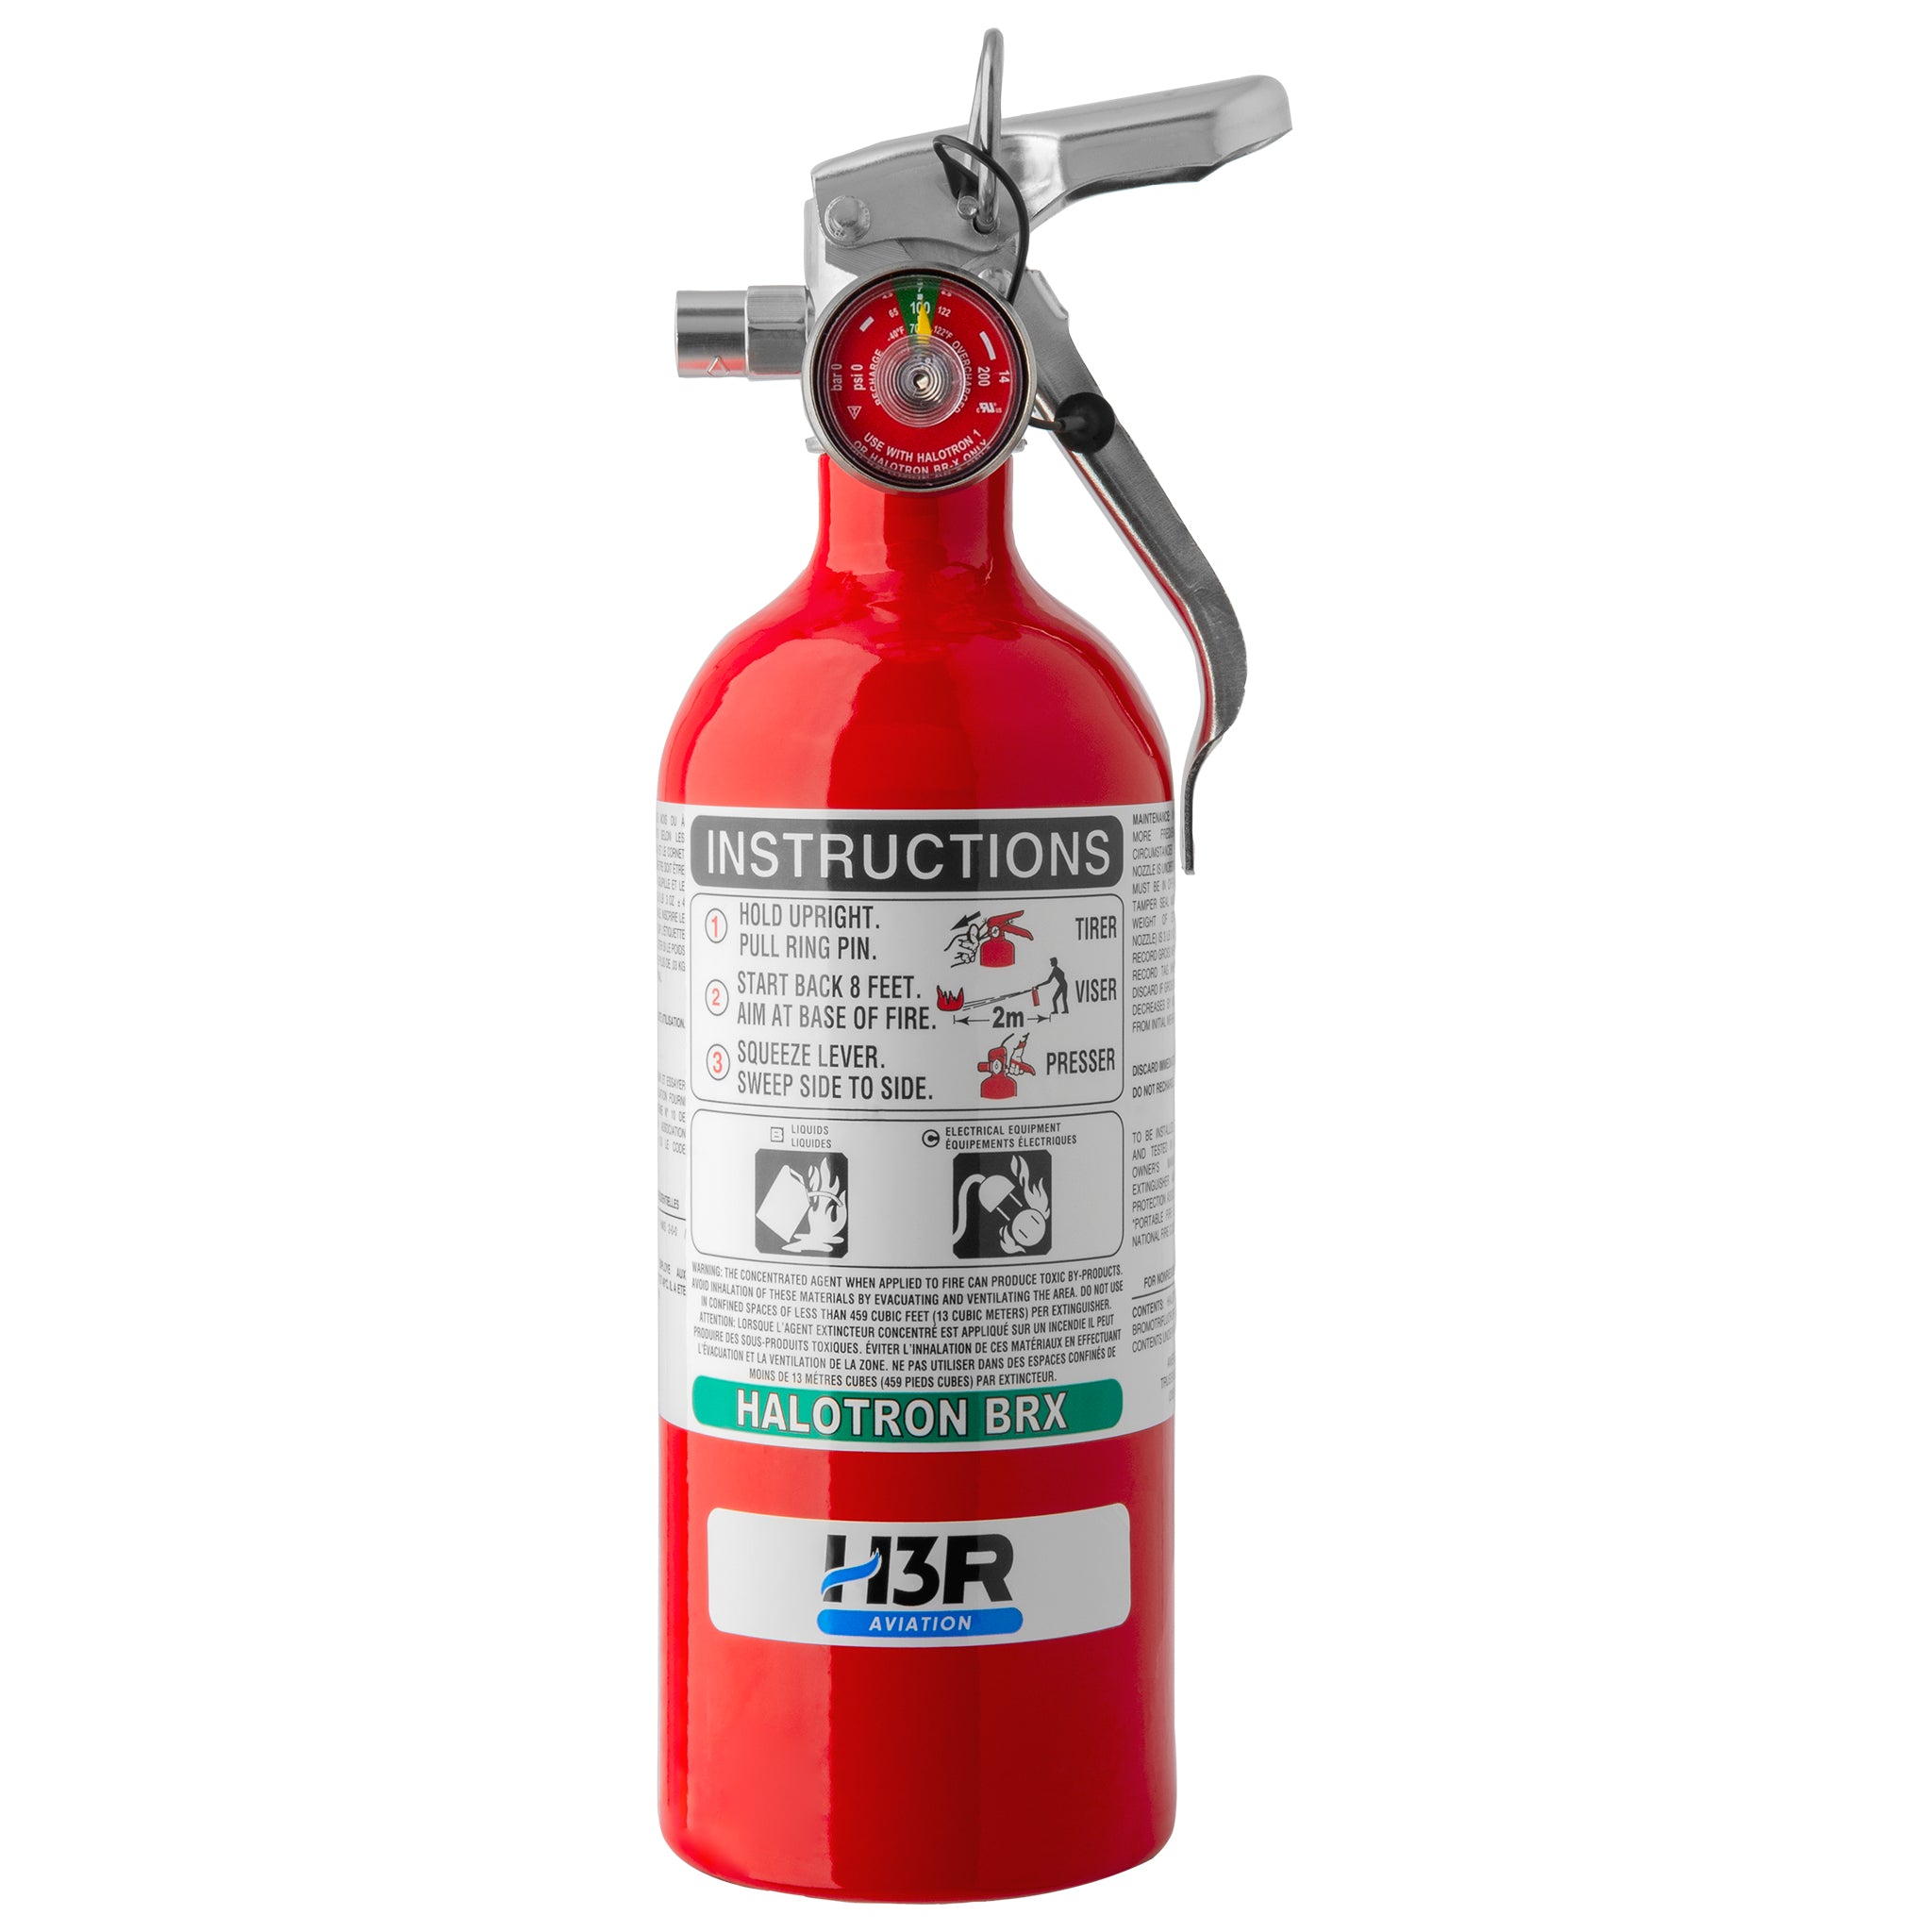 337TS - 1.92 lb. Halotron BrX Fire Extinguisher